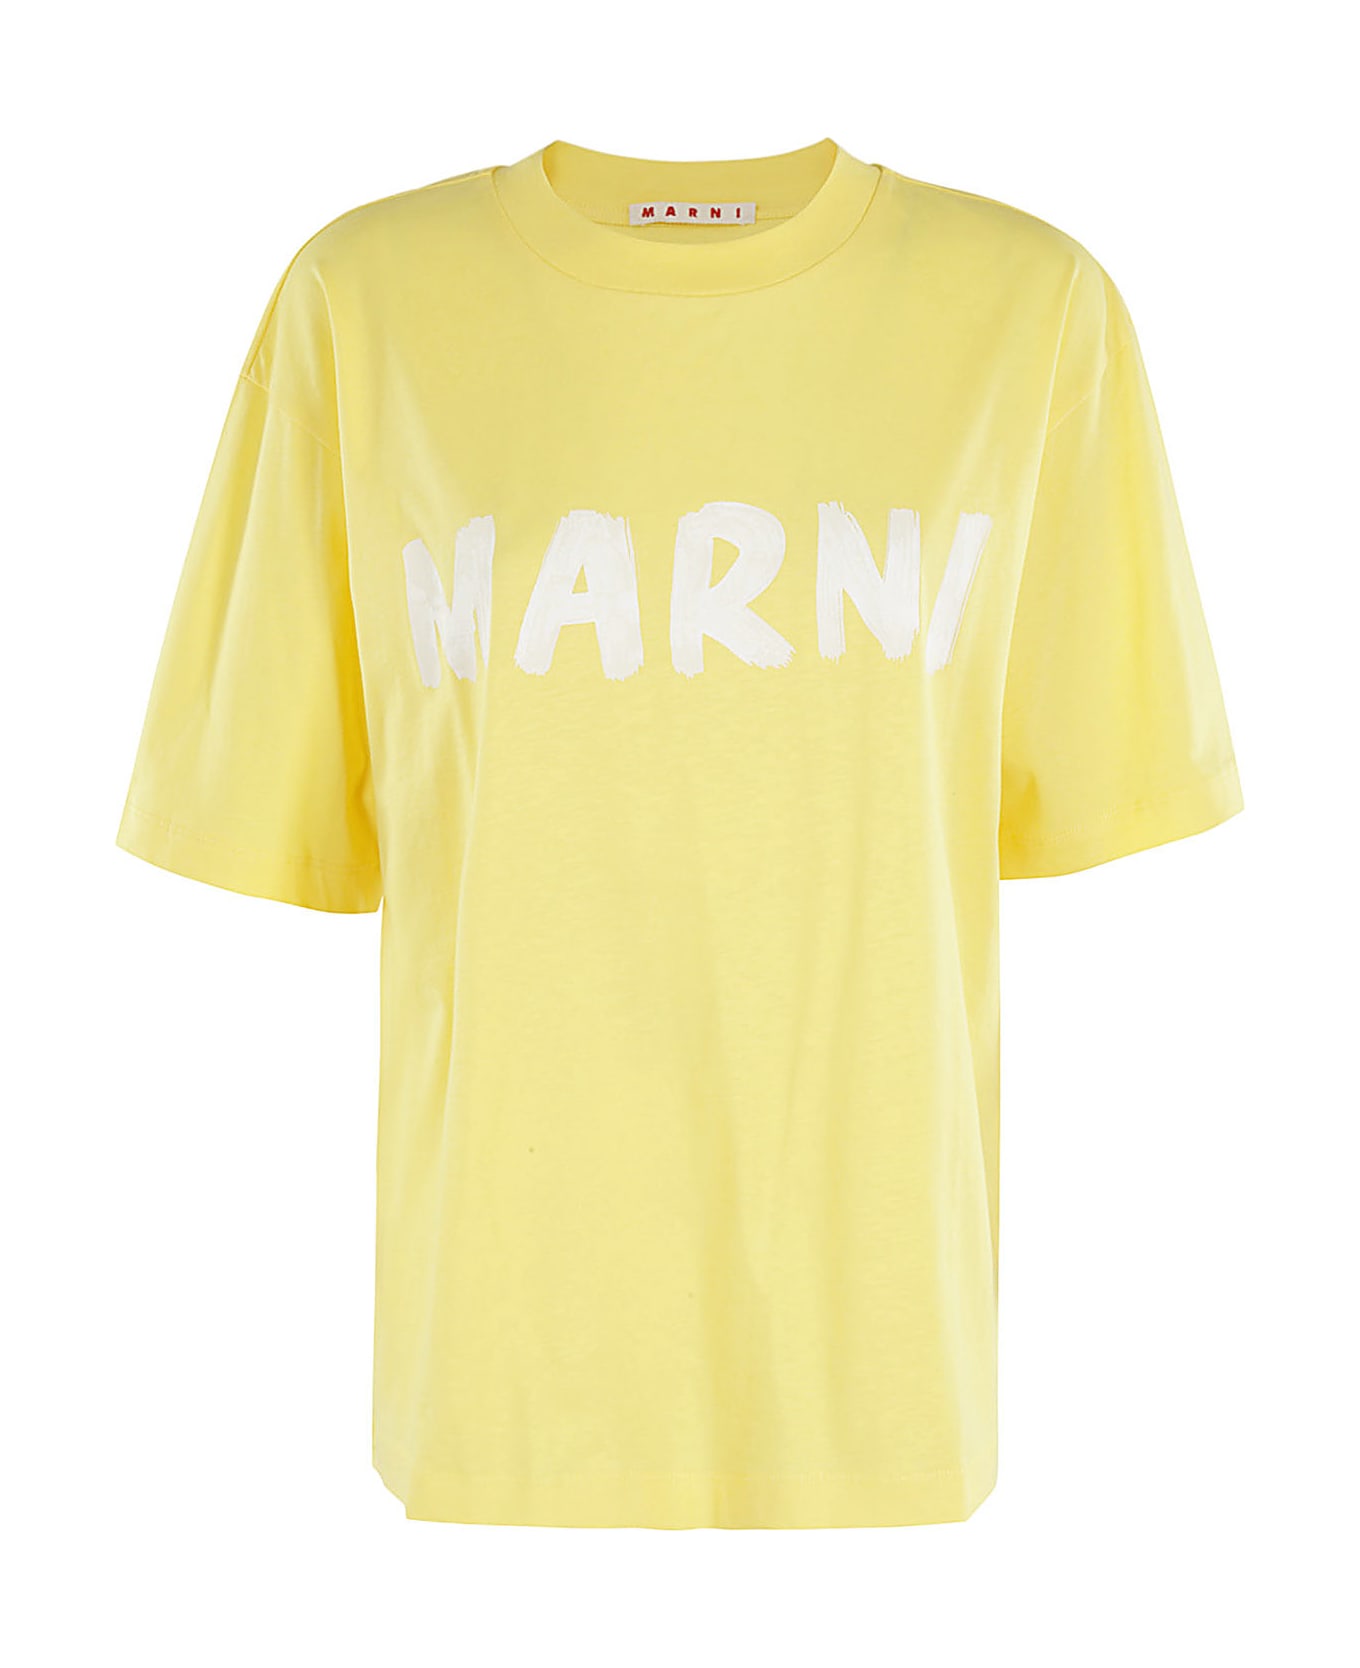 Marni T-shirt - Giallo Tシャツ